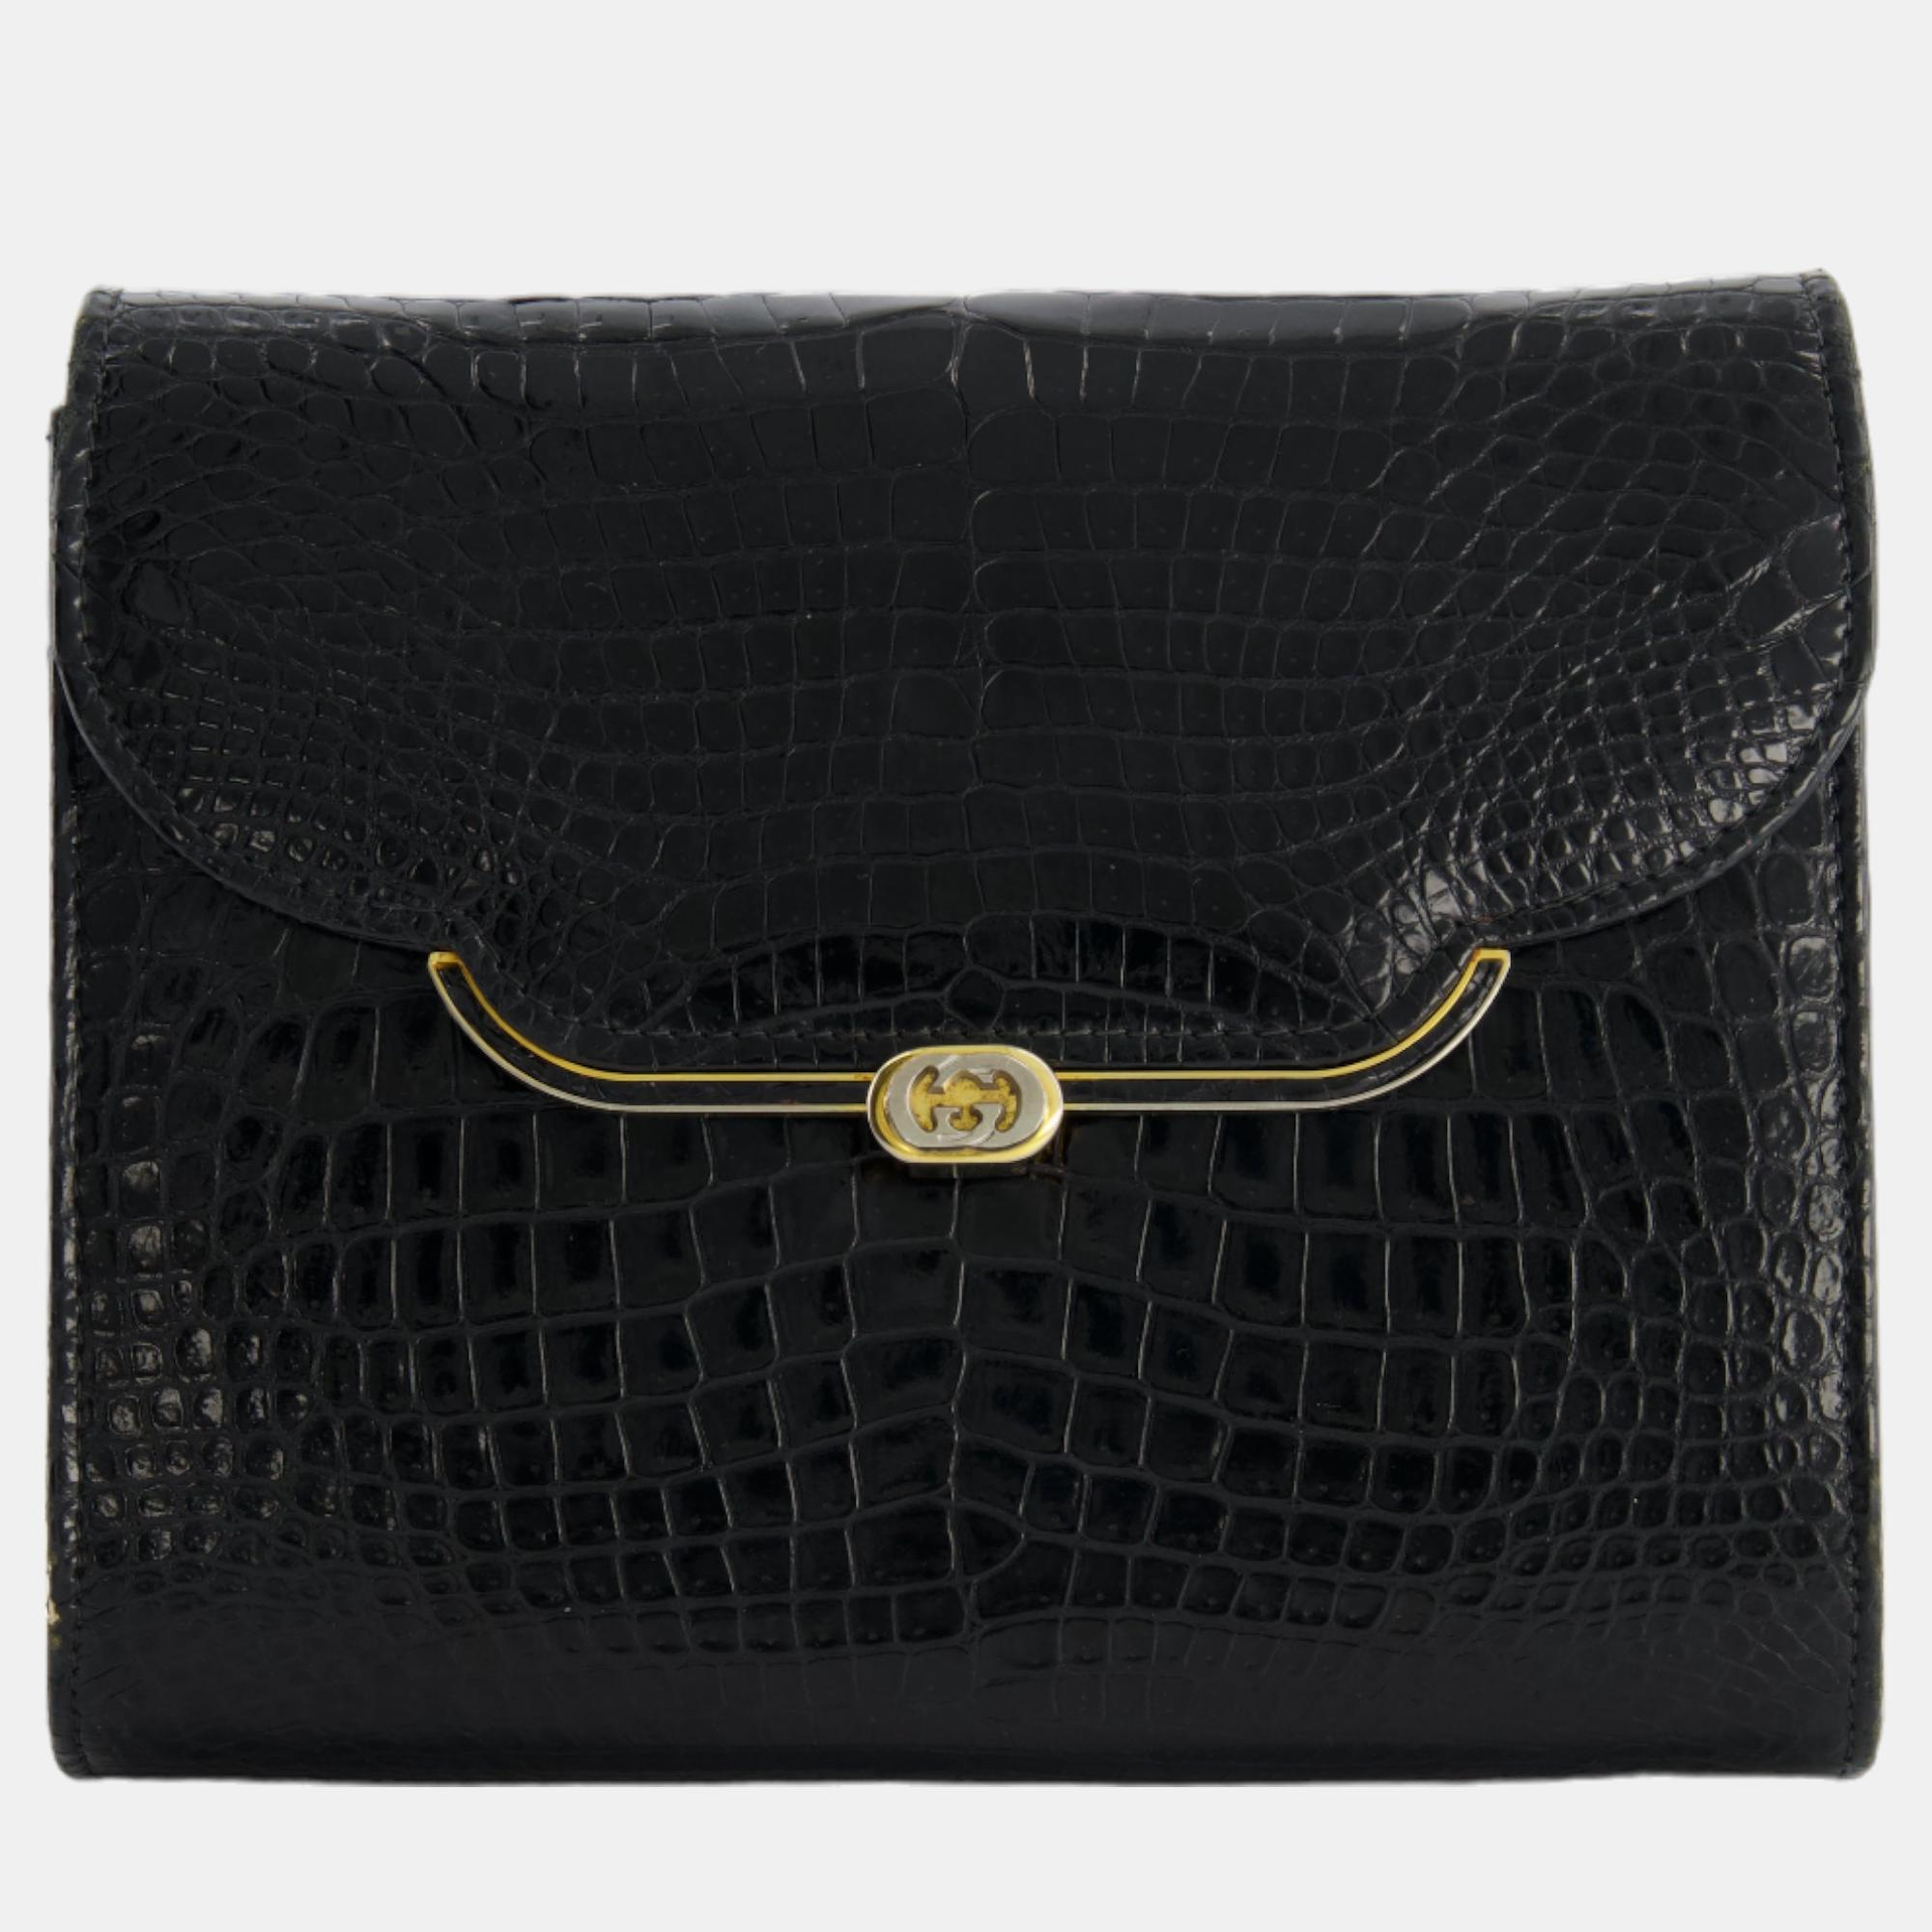 Gucci vintage black crocodile leather gg clutch bag